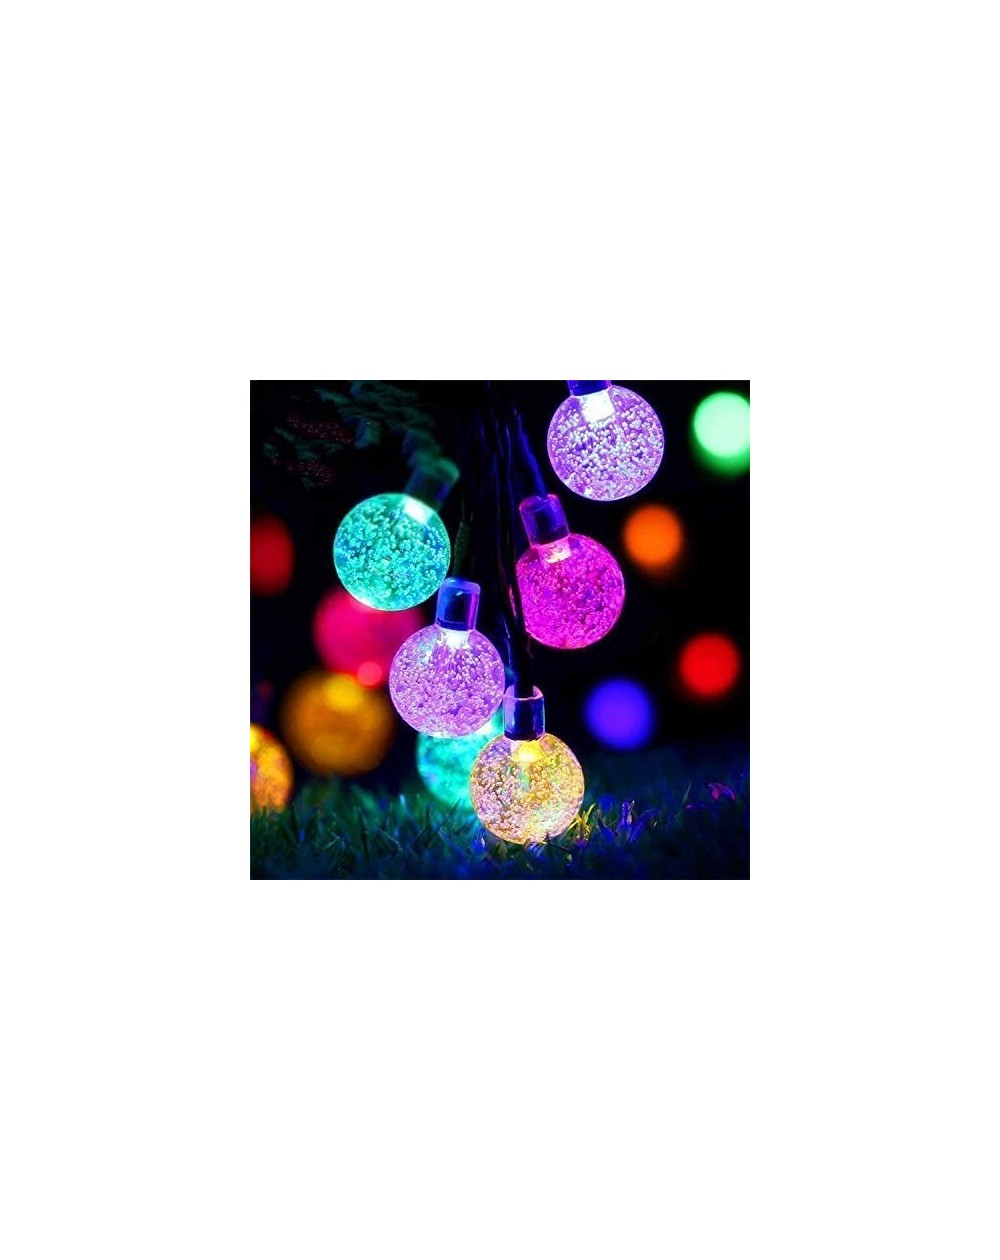 Outdoor String Lights Solar String Lights Christmas Globe 8 Modes Crystal Balls Waterproof Fairy String Lights Solar &USB Pow...